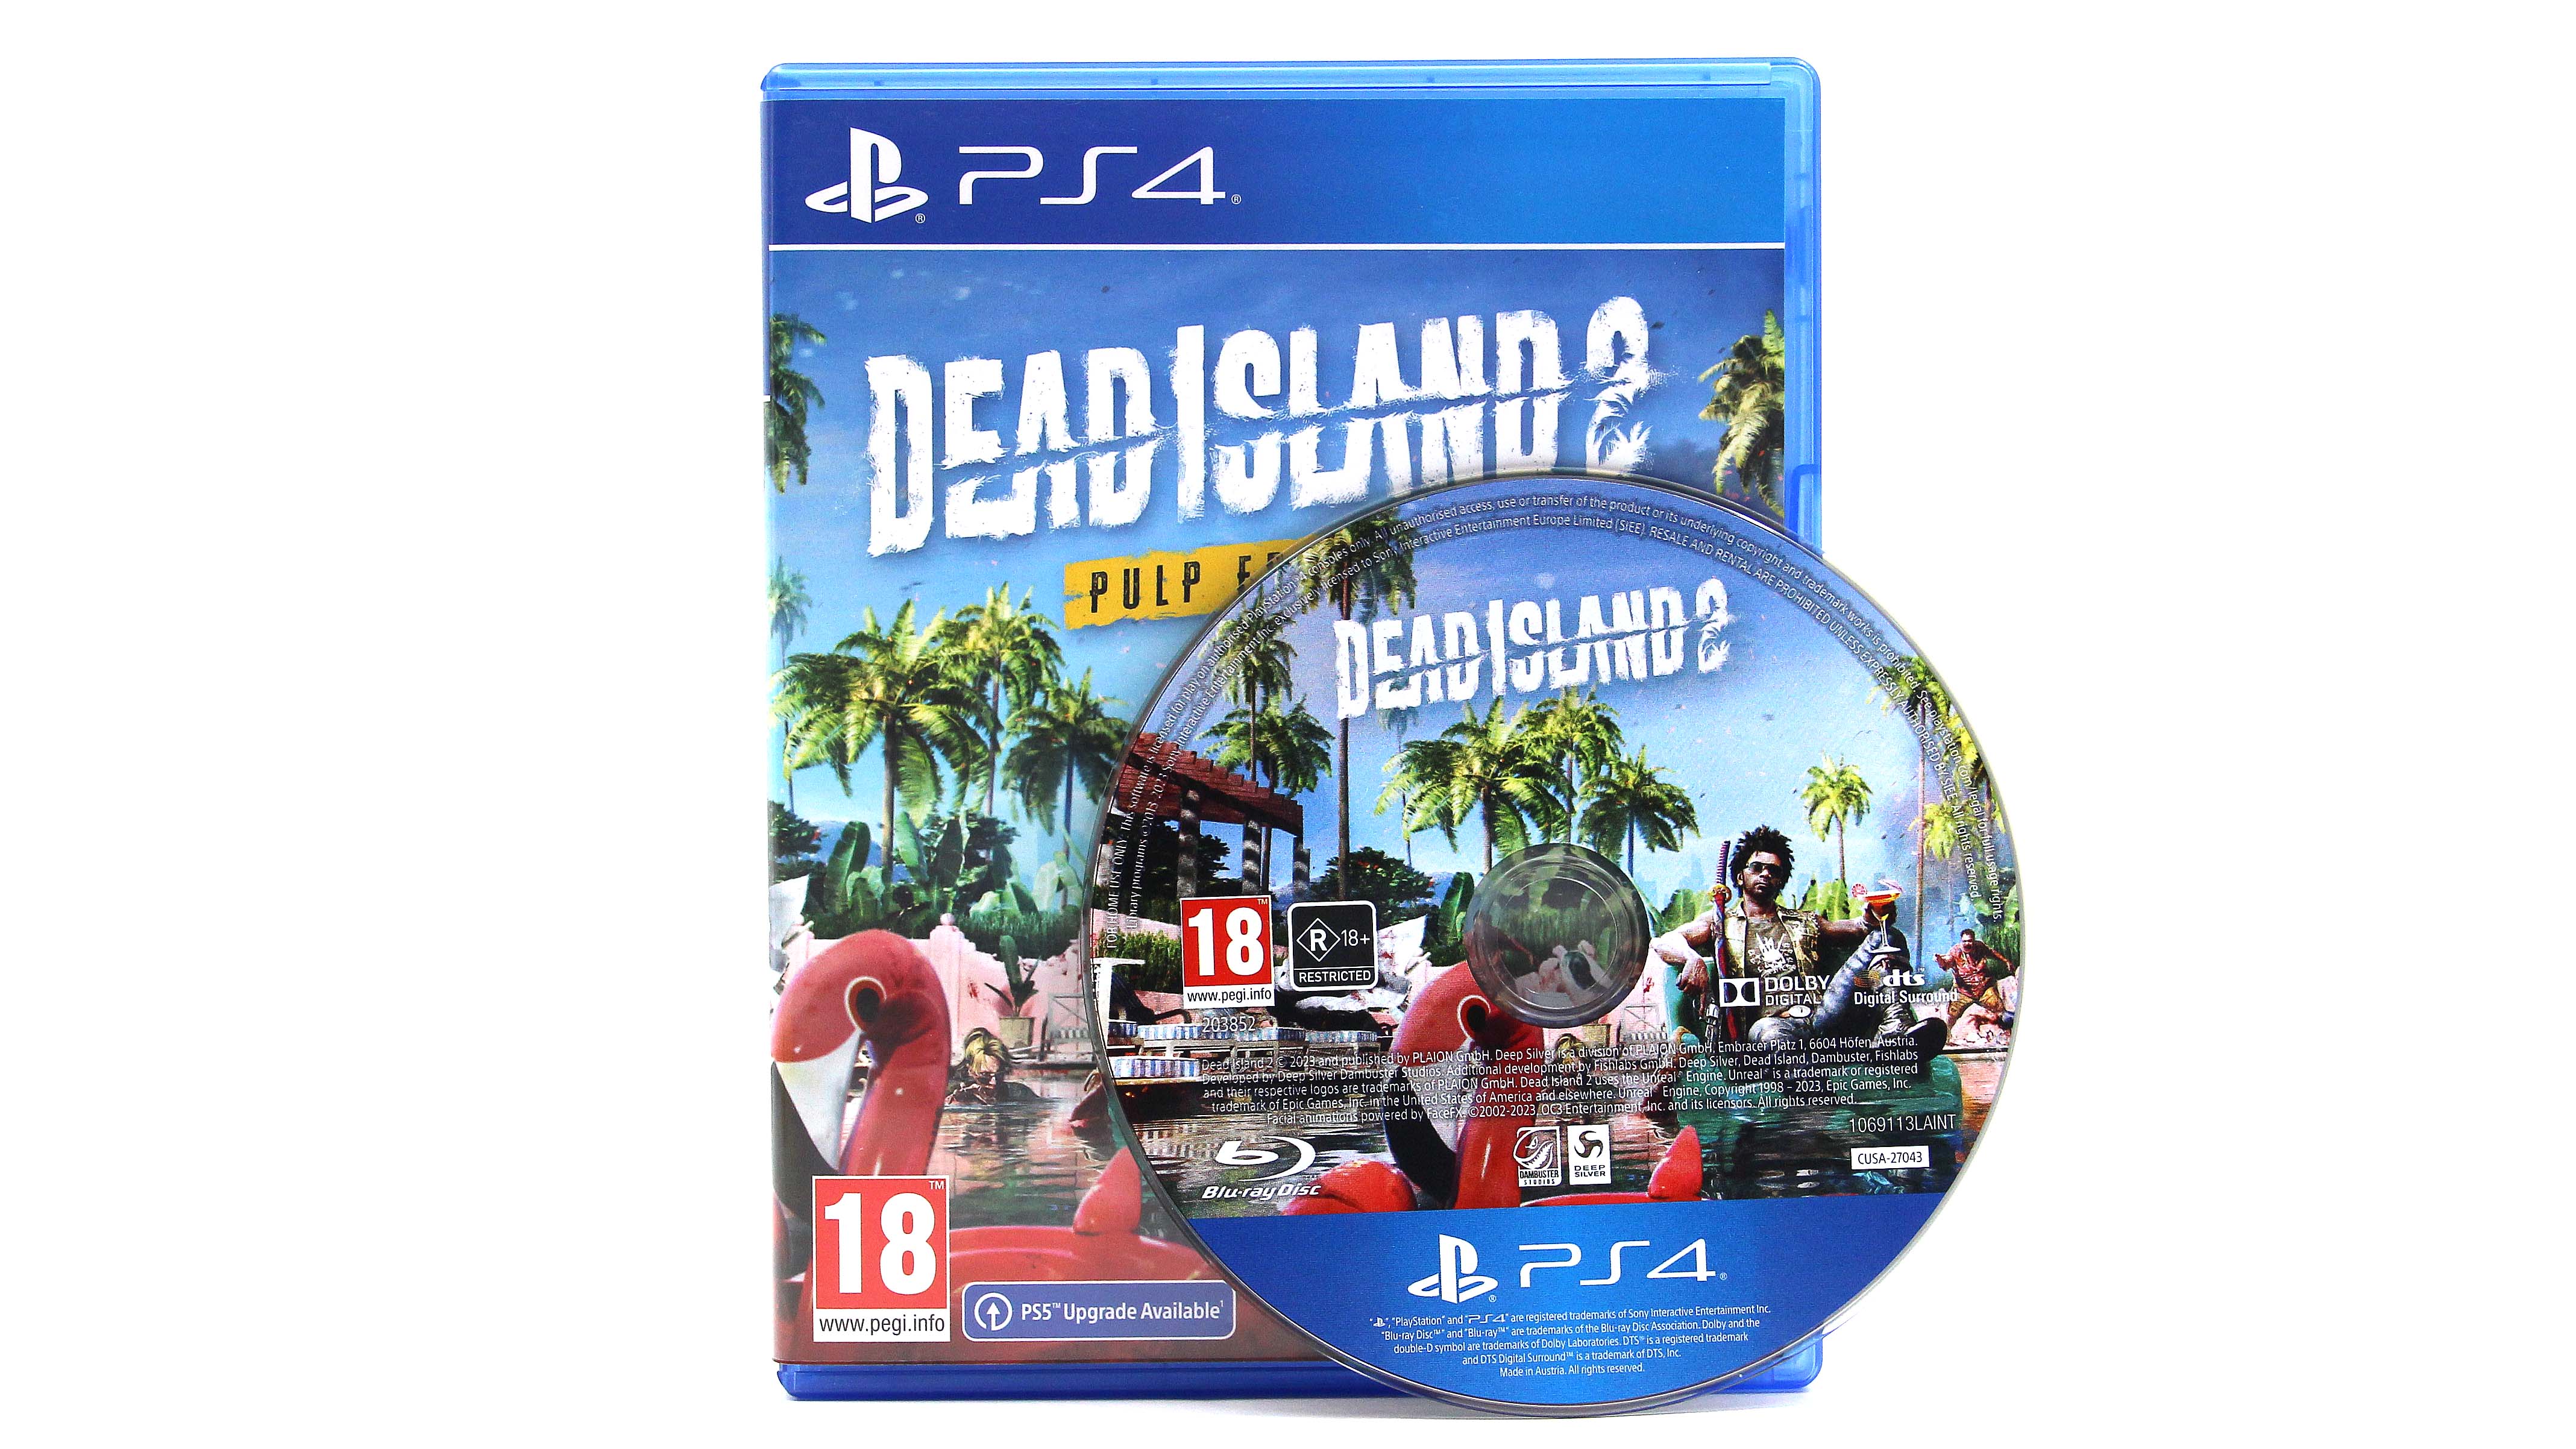 Pulp edition dead island. Dead Island 2 Pulp Edition Pack. Dead Island 2 Pulp Edition что входит.